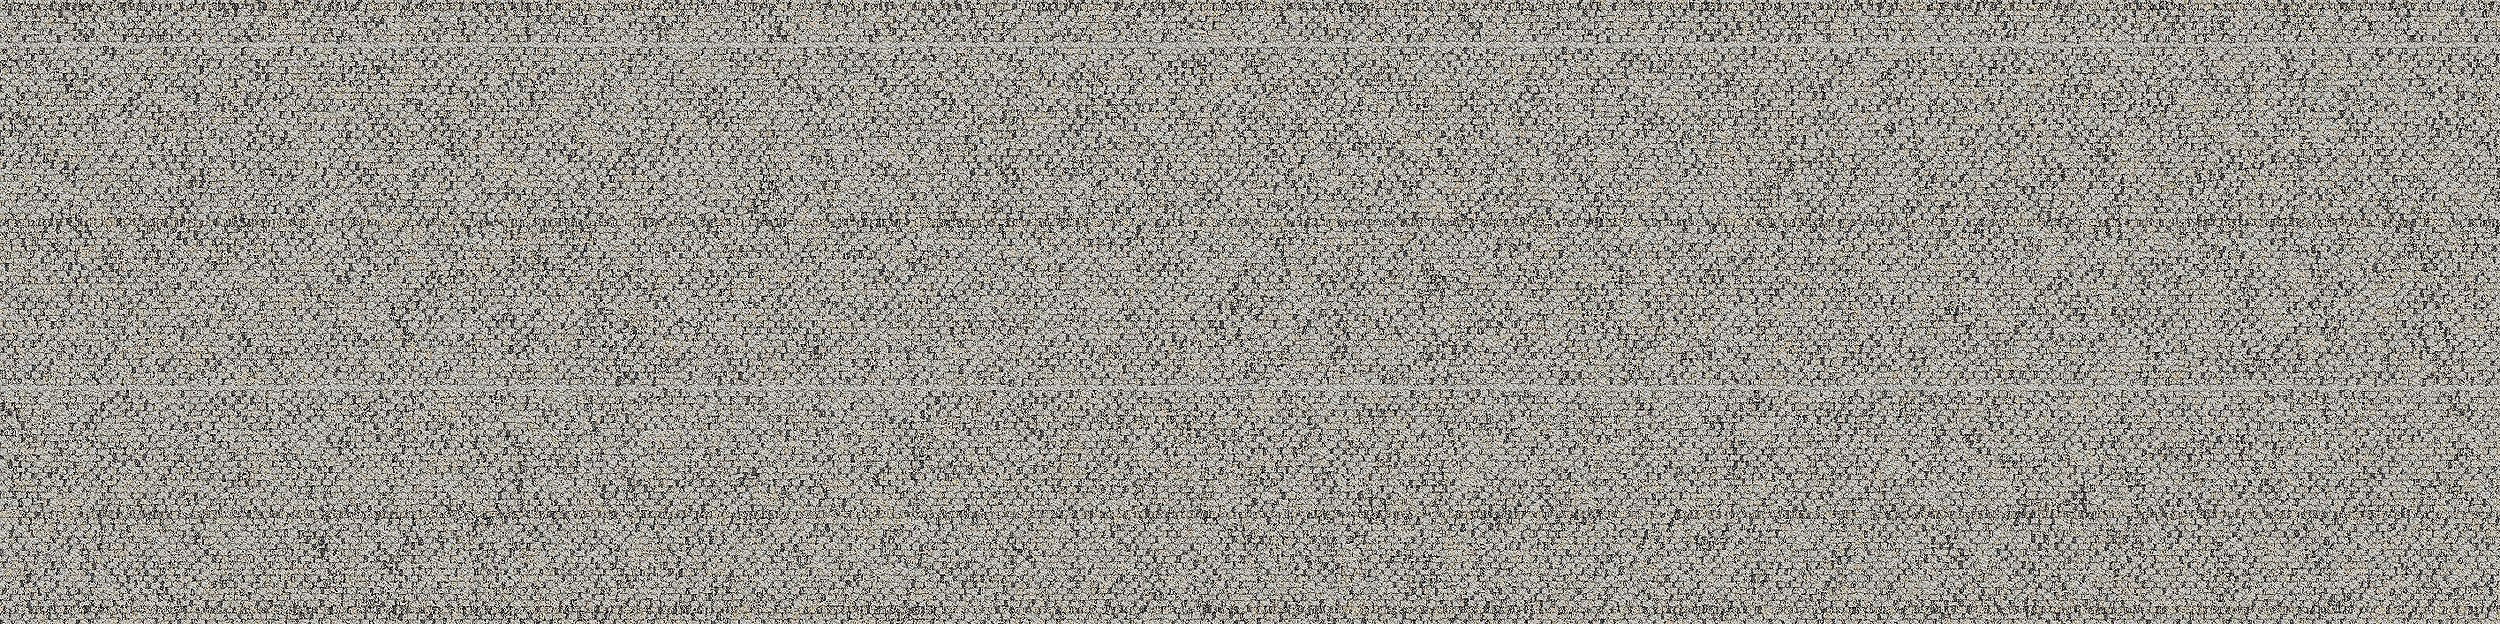 WW860 Carpet Tile In Linen Tweed image number 10